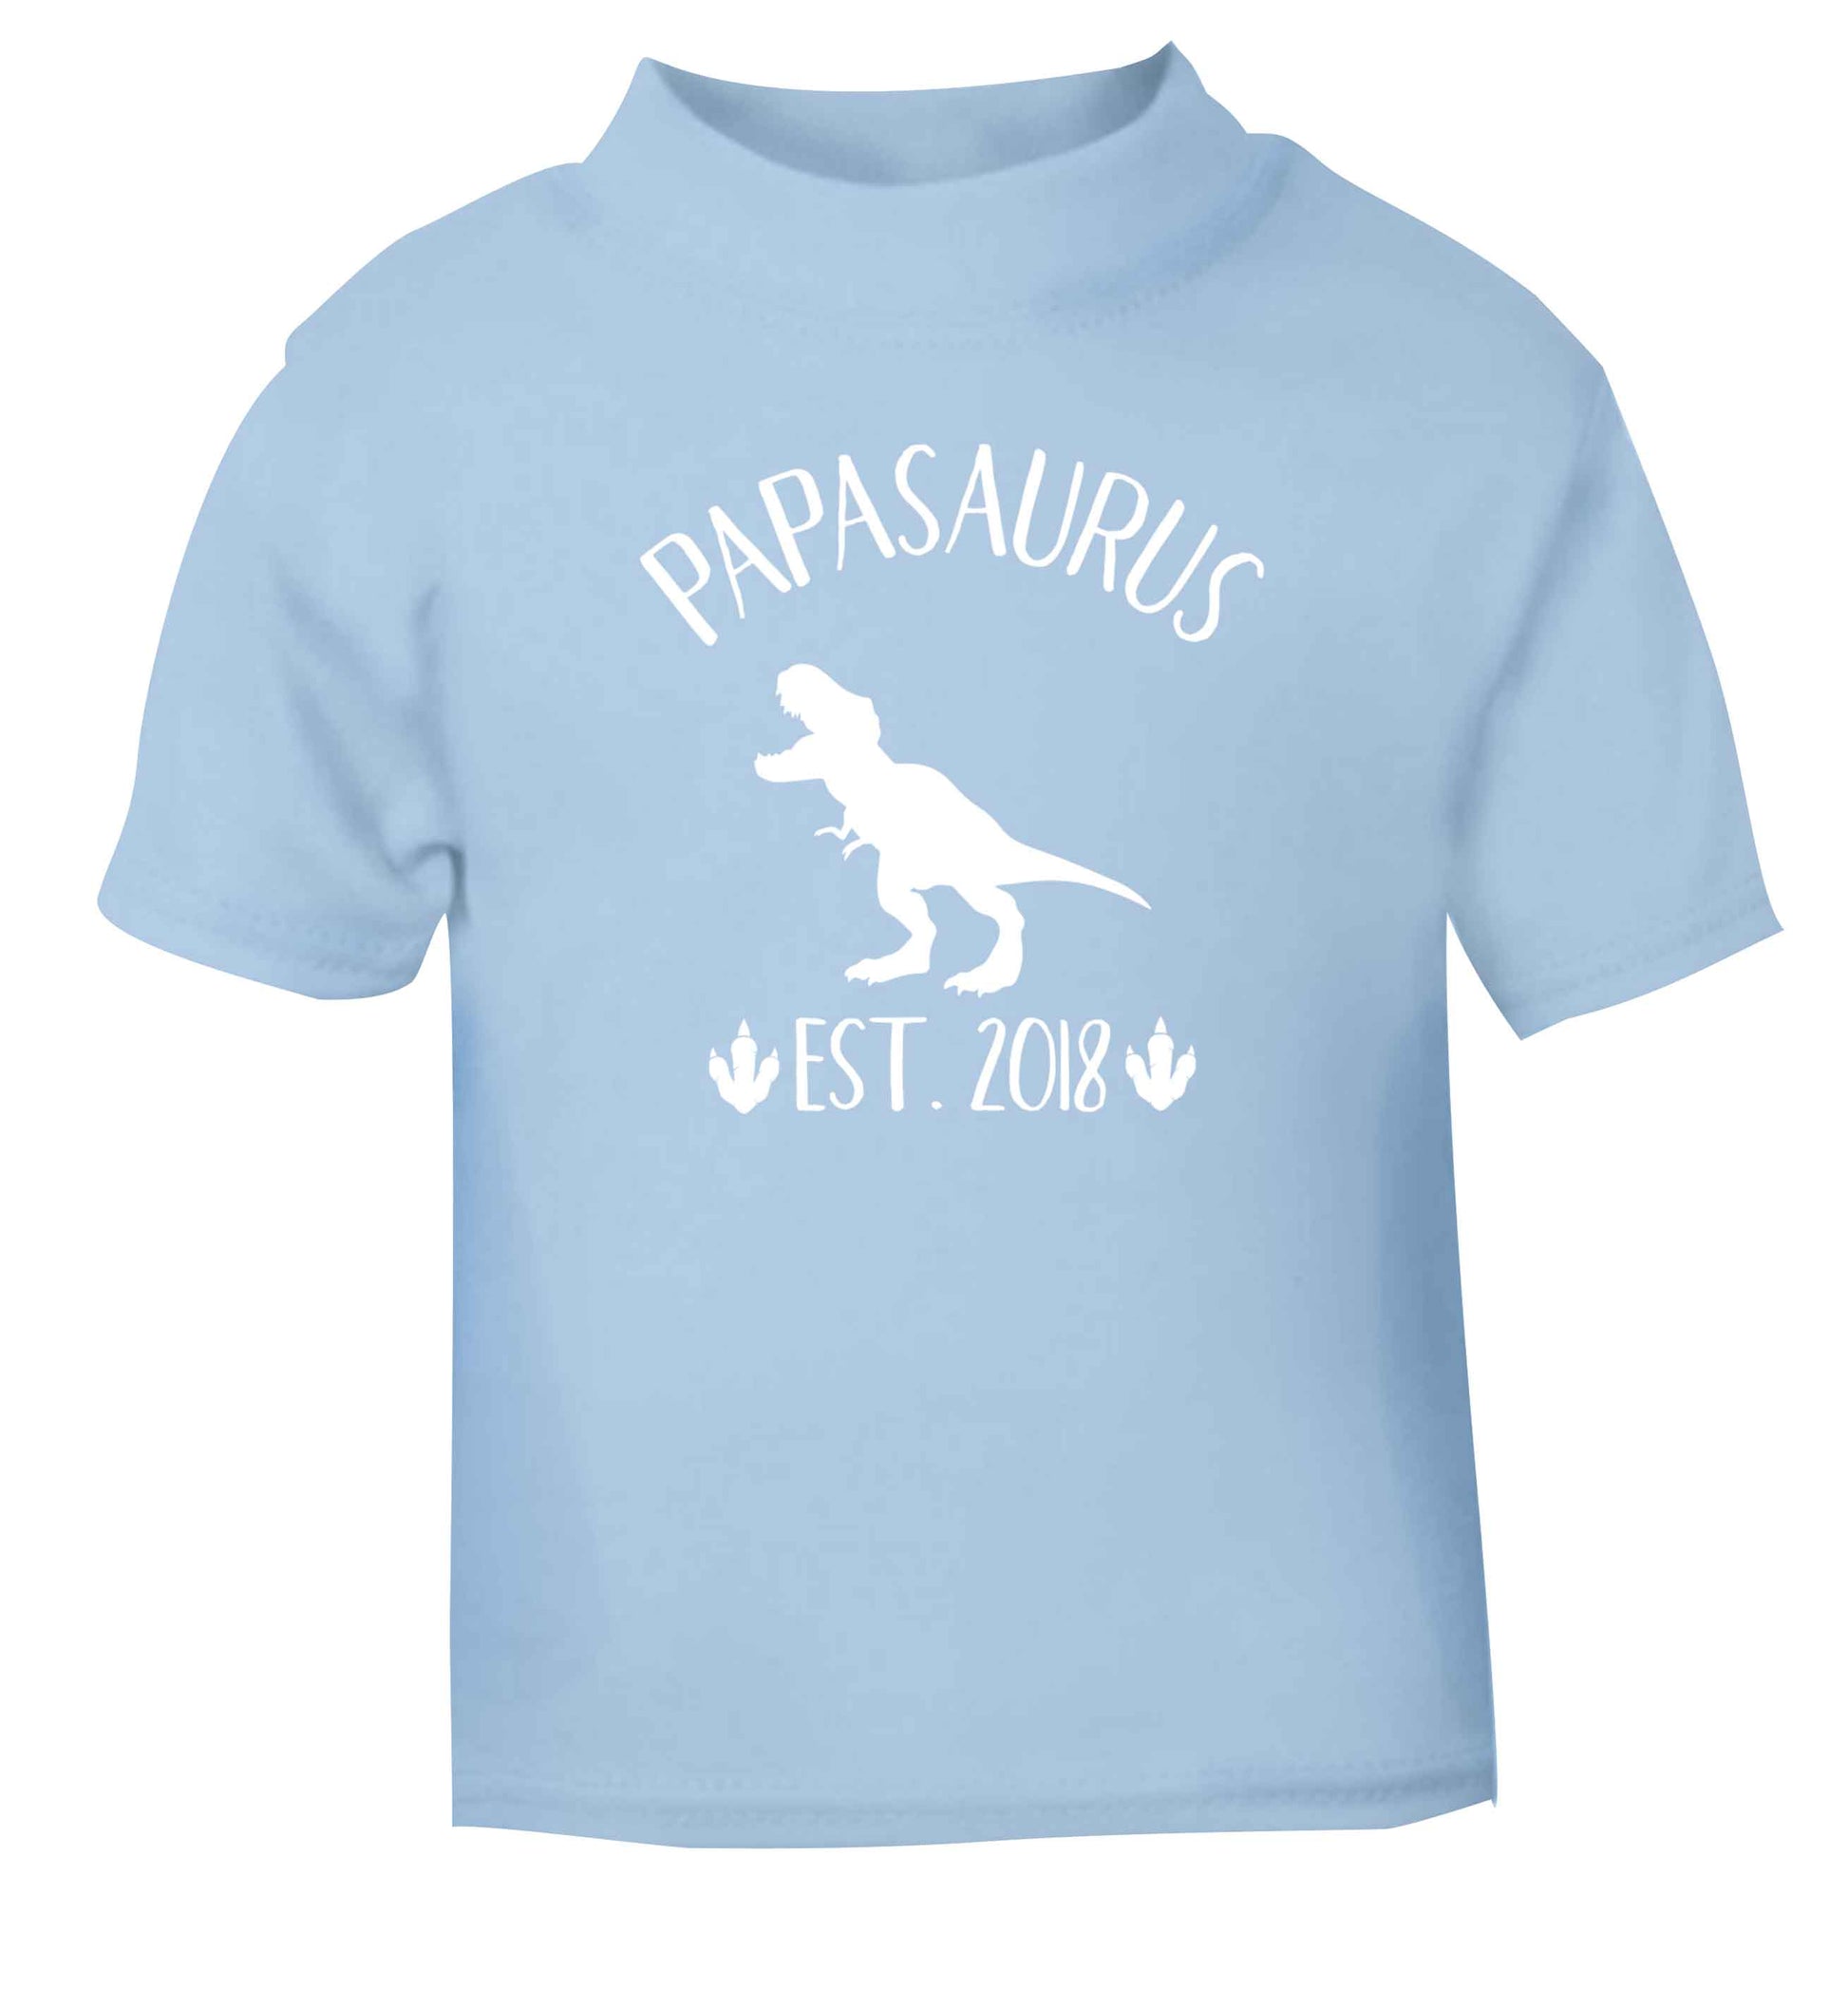 Personalised papasaurus since (custom date) light blue Baby Toddler Tshirt 2 Years